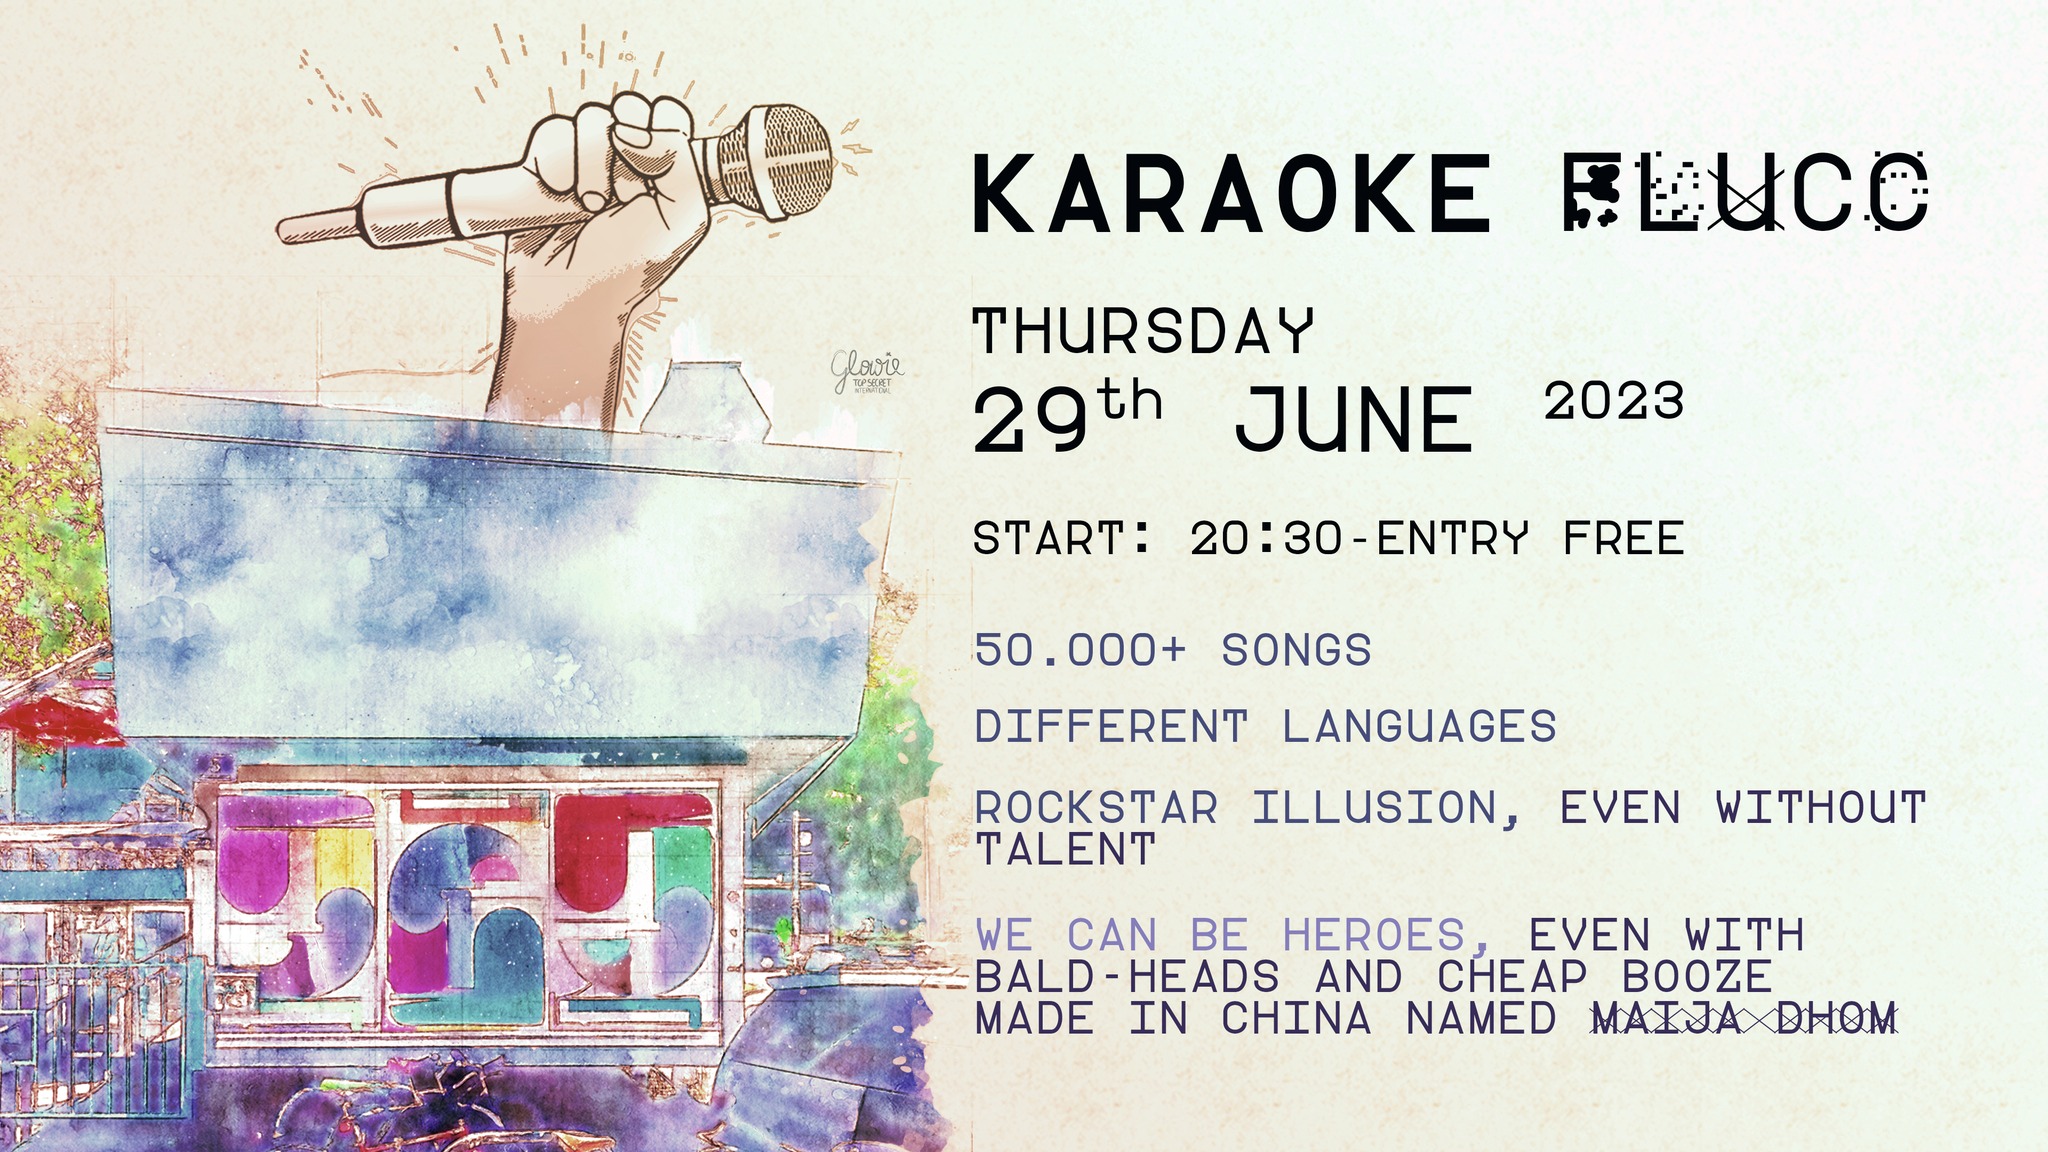 Karaoke FLUCC am 29. June 2023 @ Fluc.